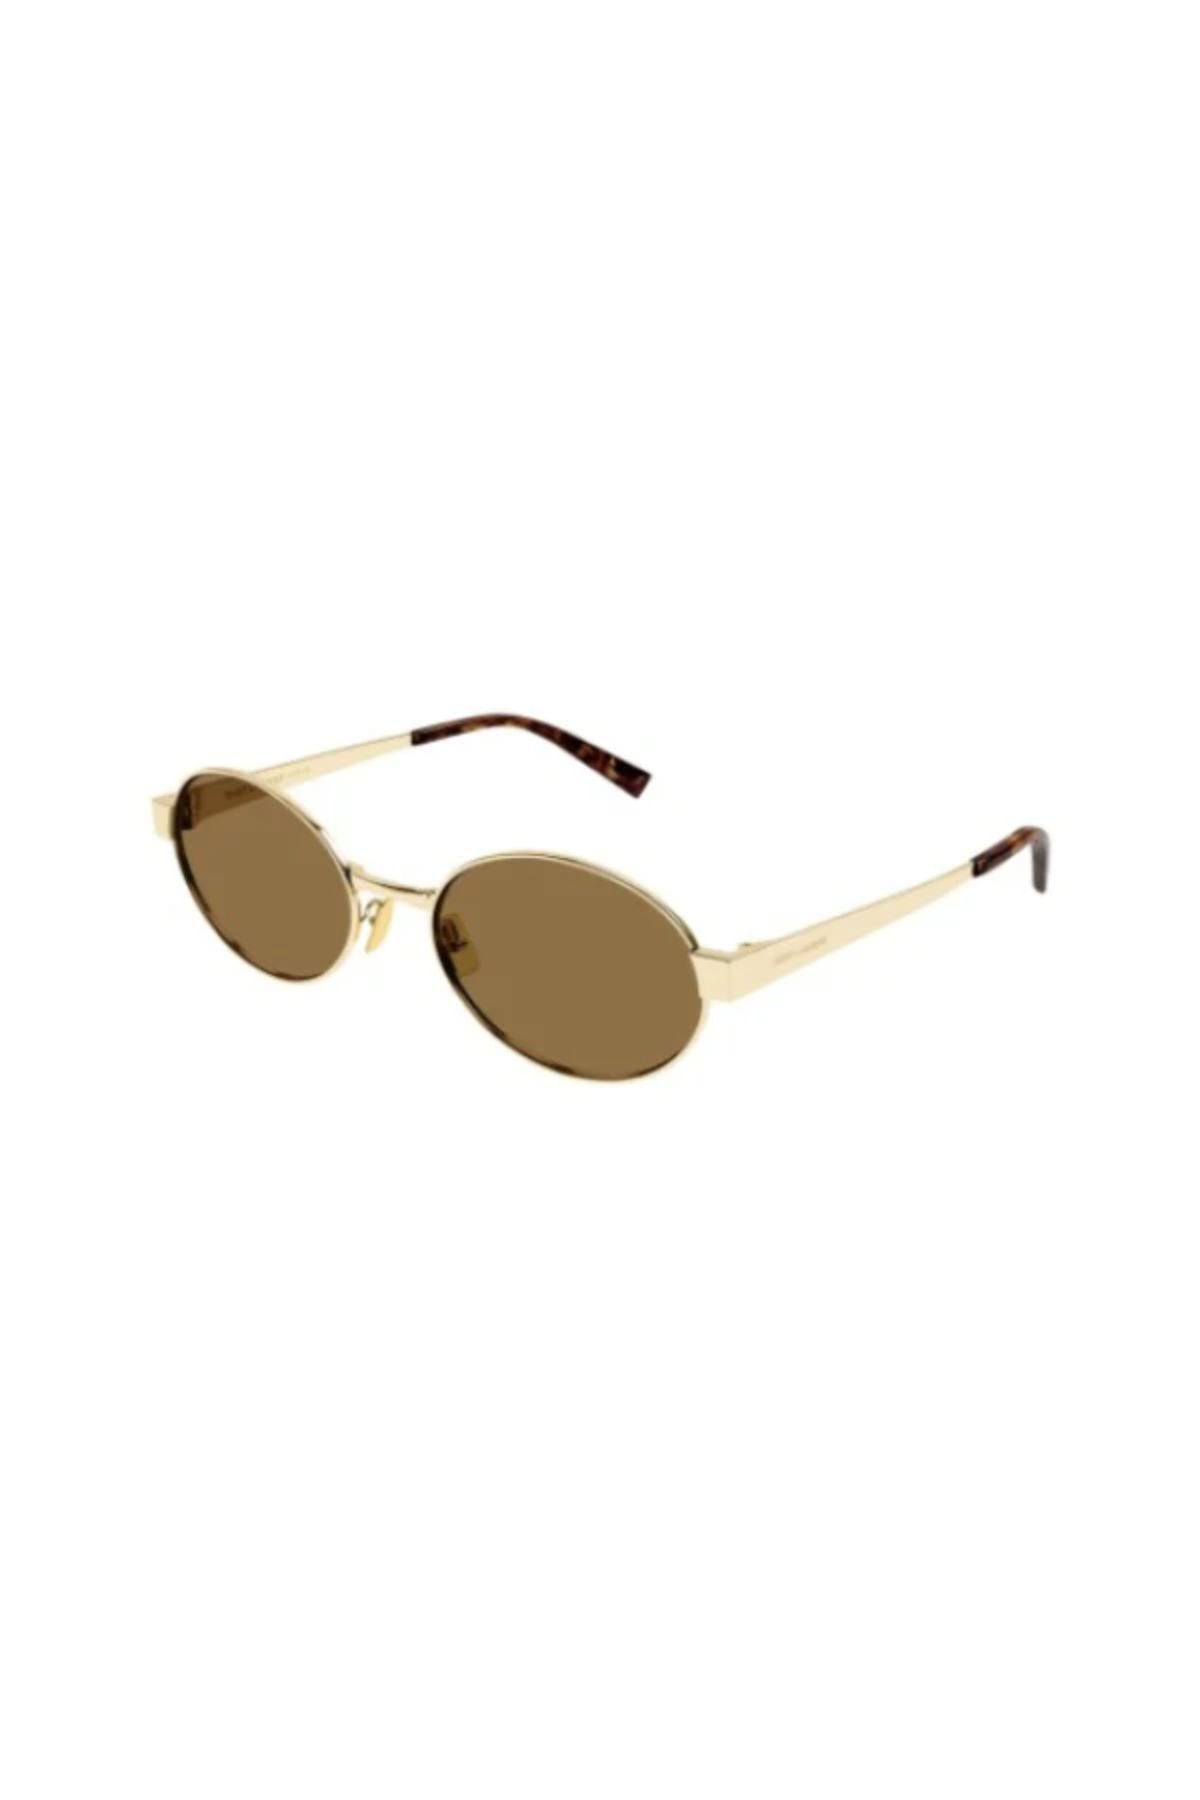 Saint Laurent Oval Gold Framed Sunglasses - Gold